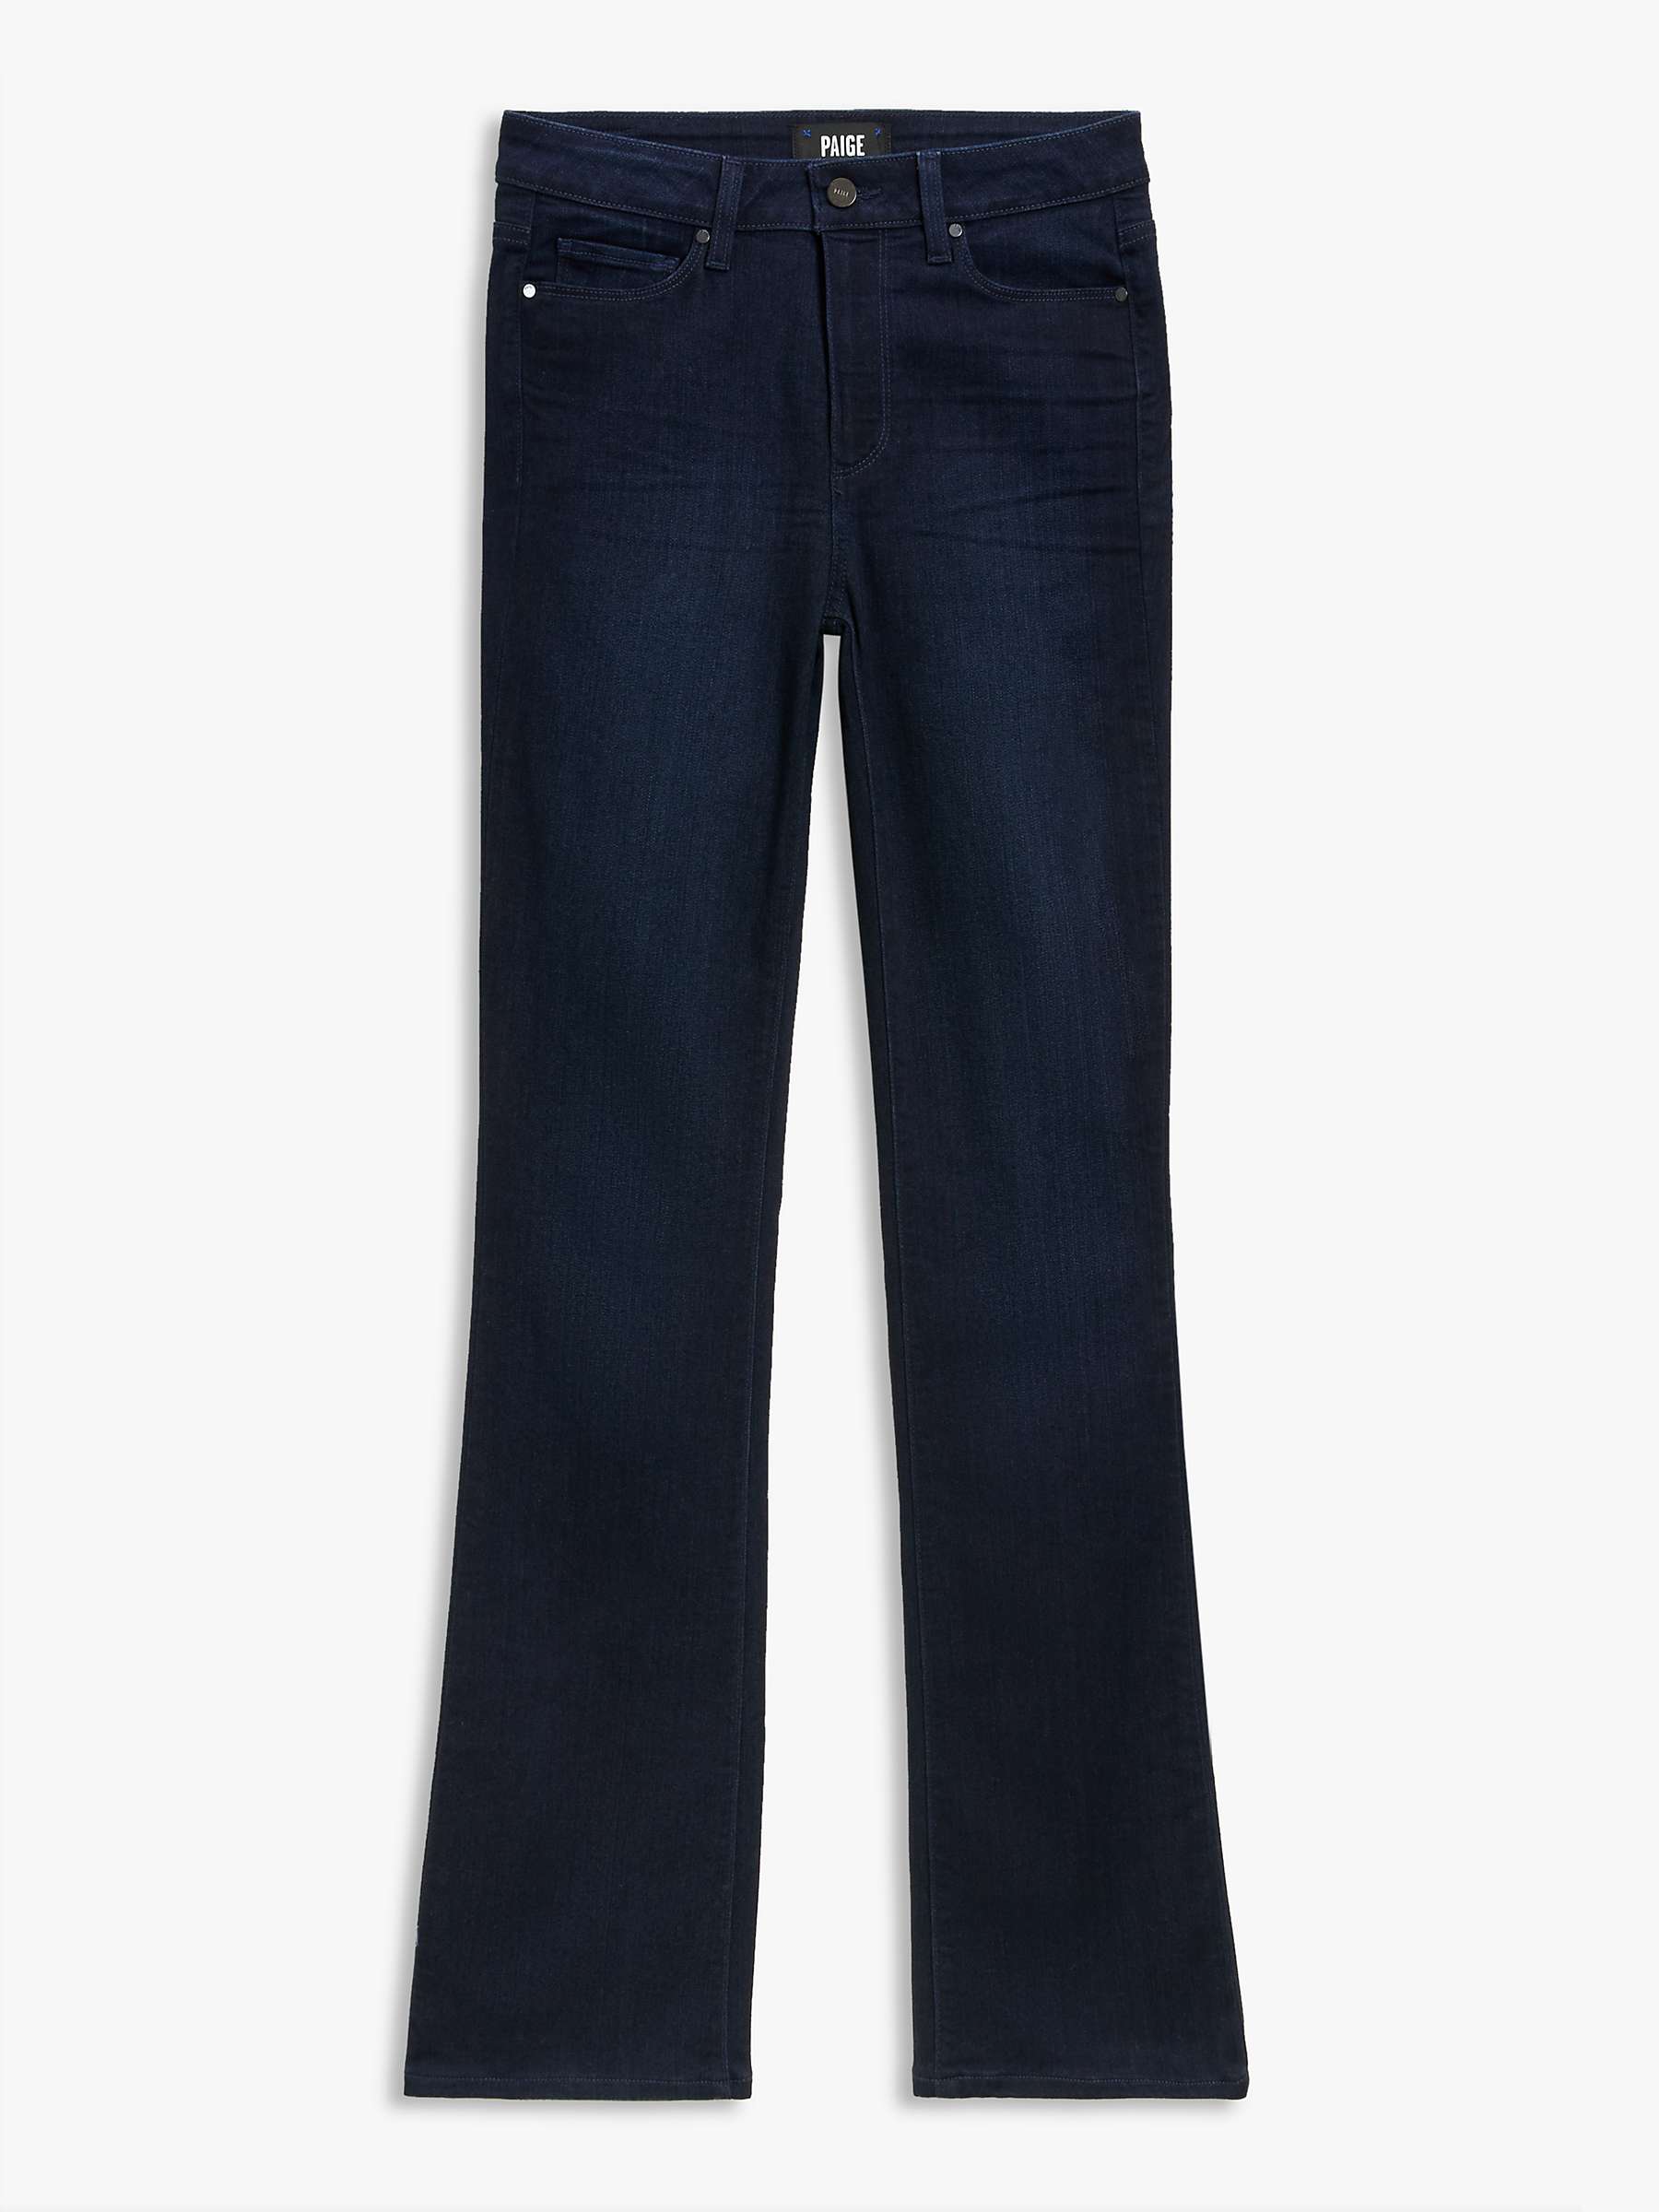 Buy PAIGE High Rise Manhattan Bootcut Jeans, Lana Online at johnlewis.com